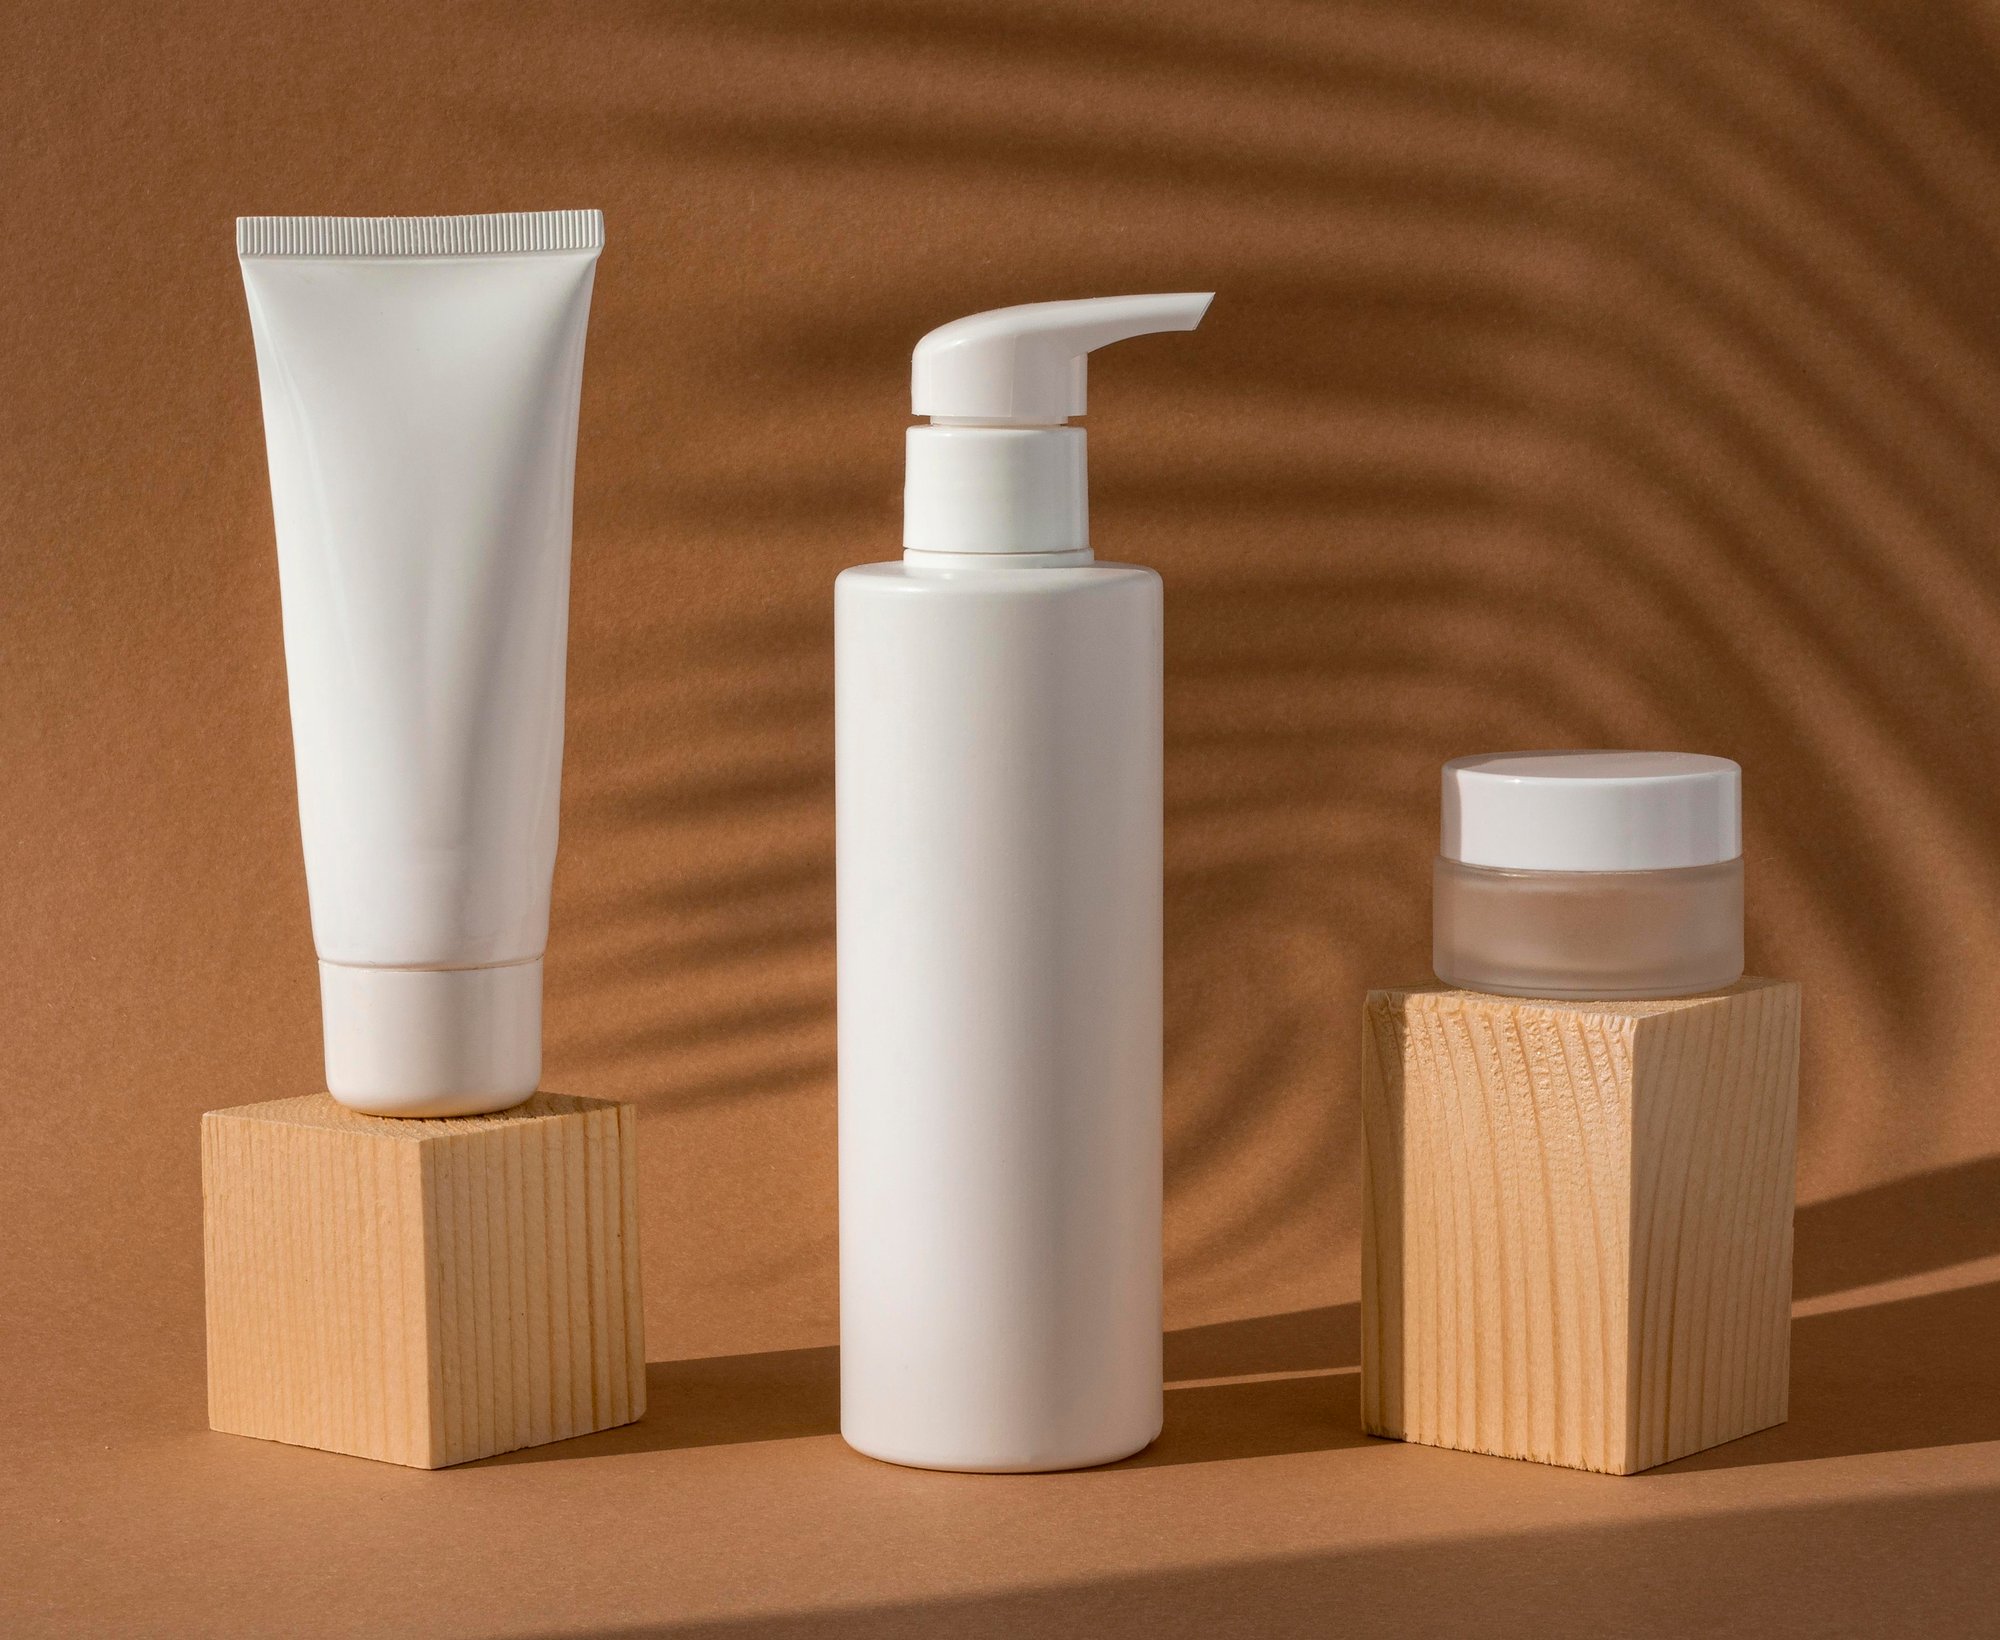 skin-products-arrangement-wooden-blocks